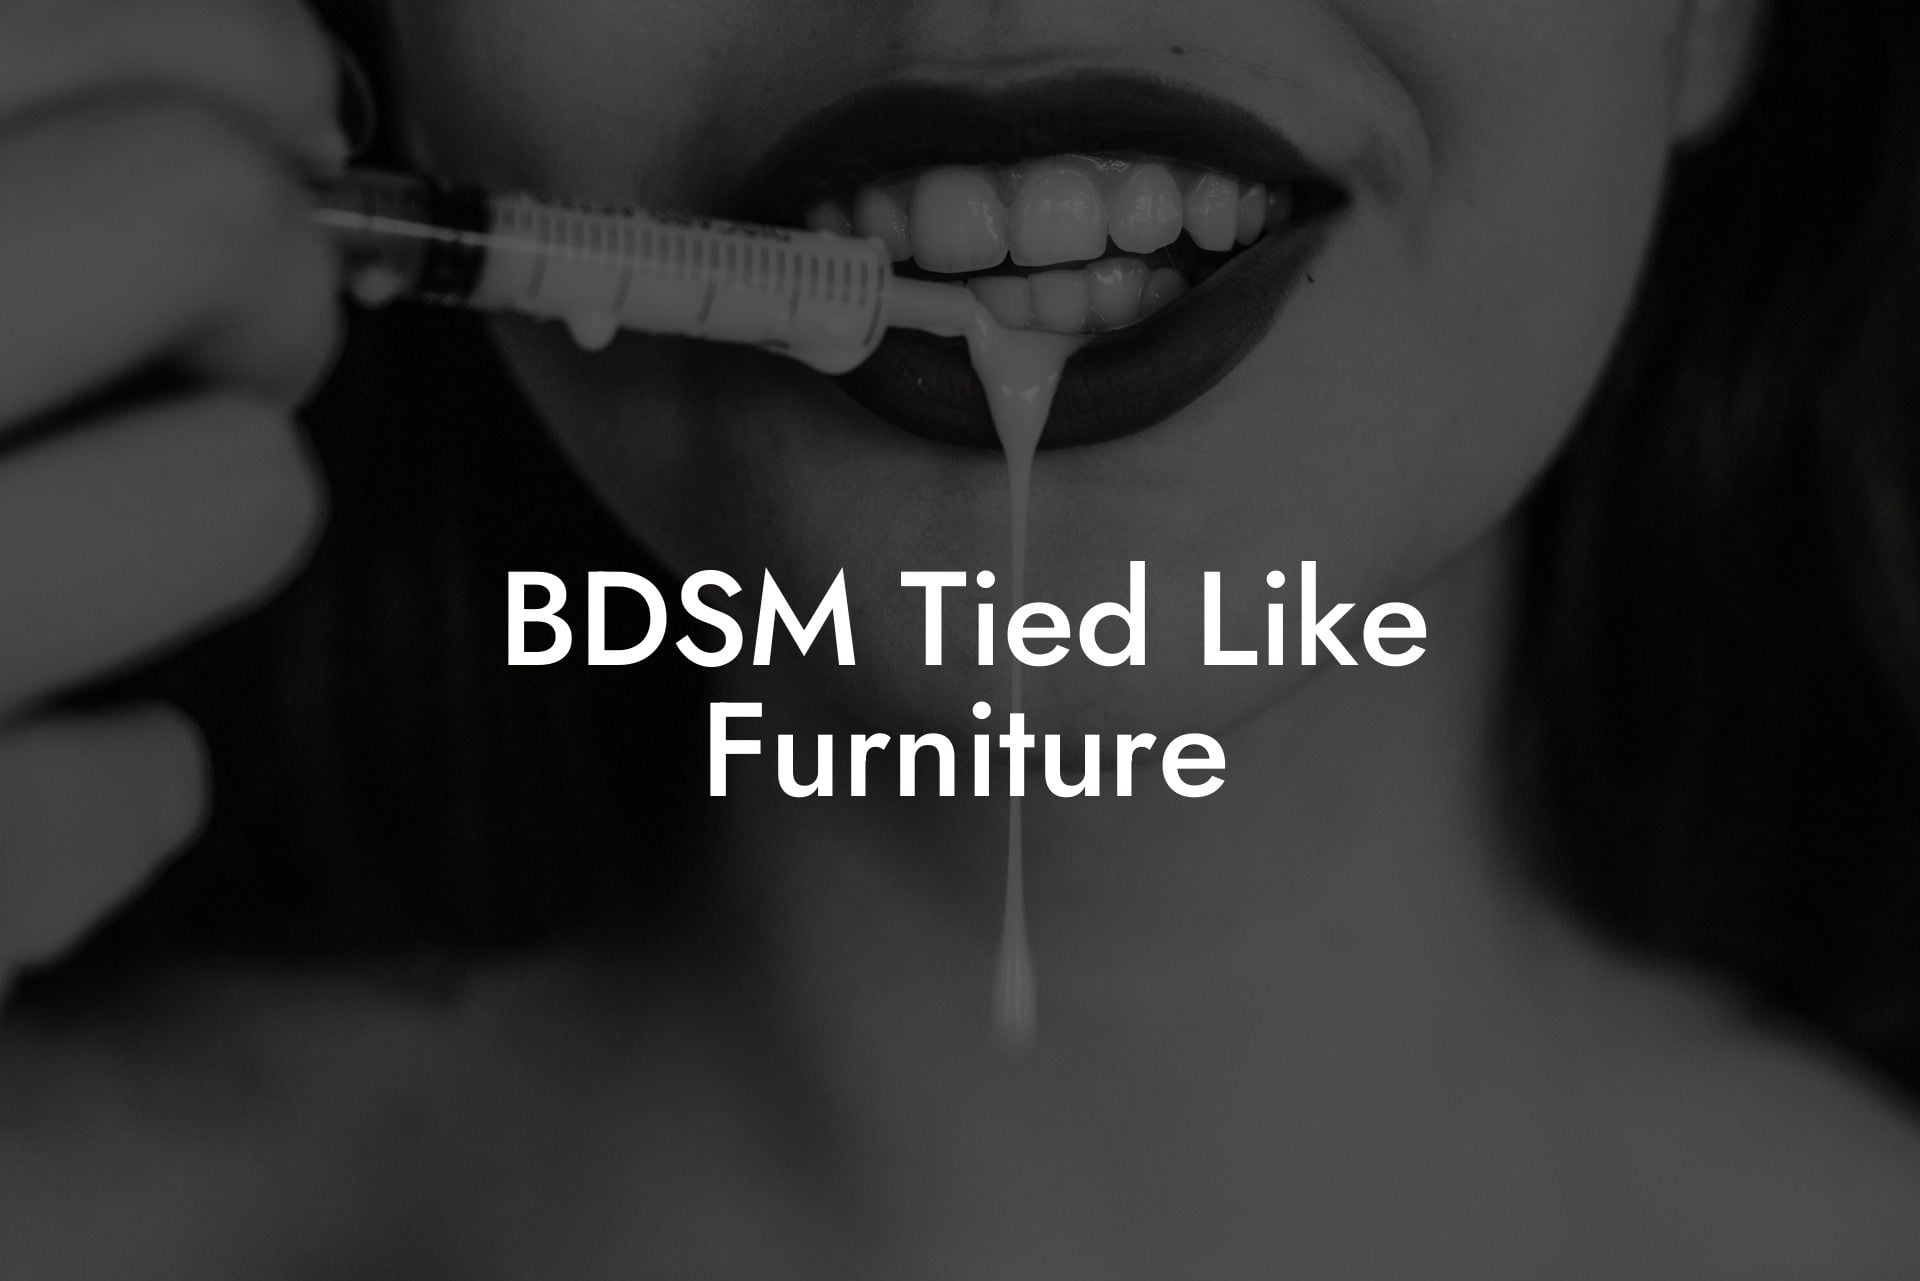 BDSM Tied Like Furniture